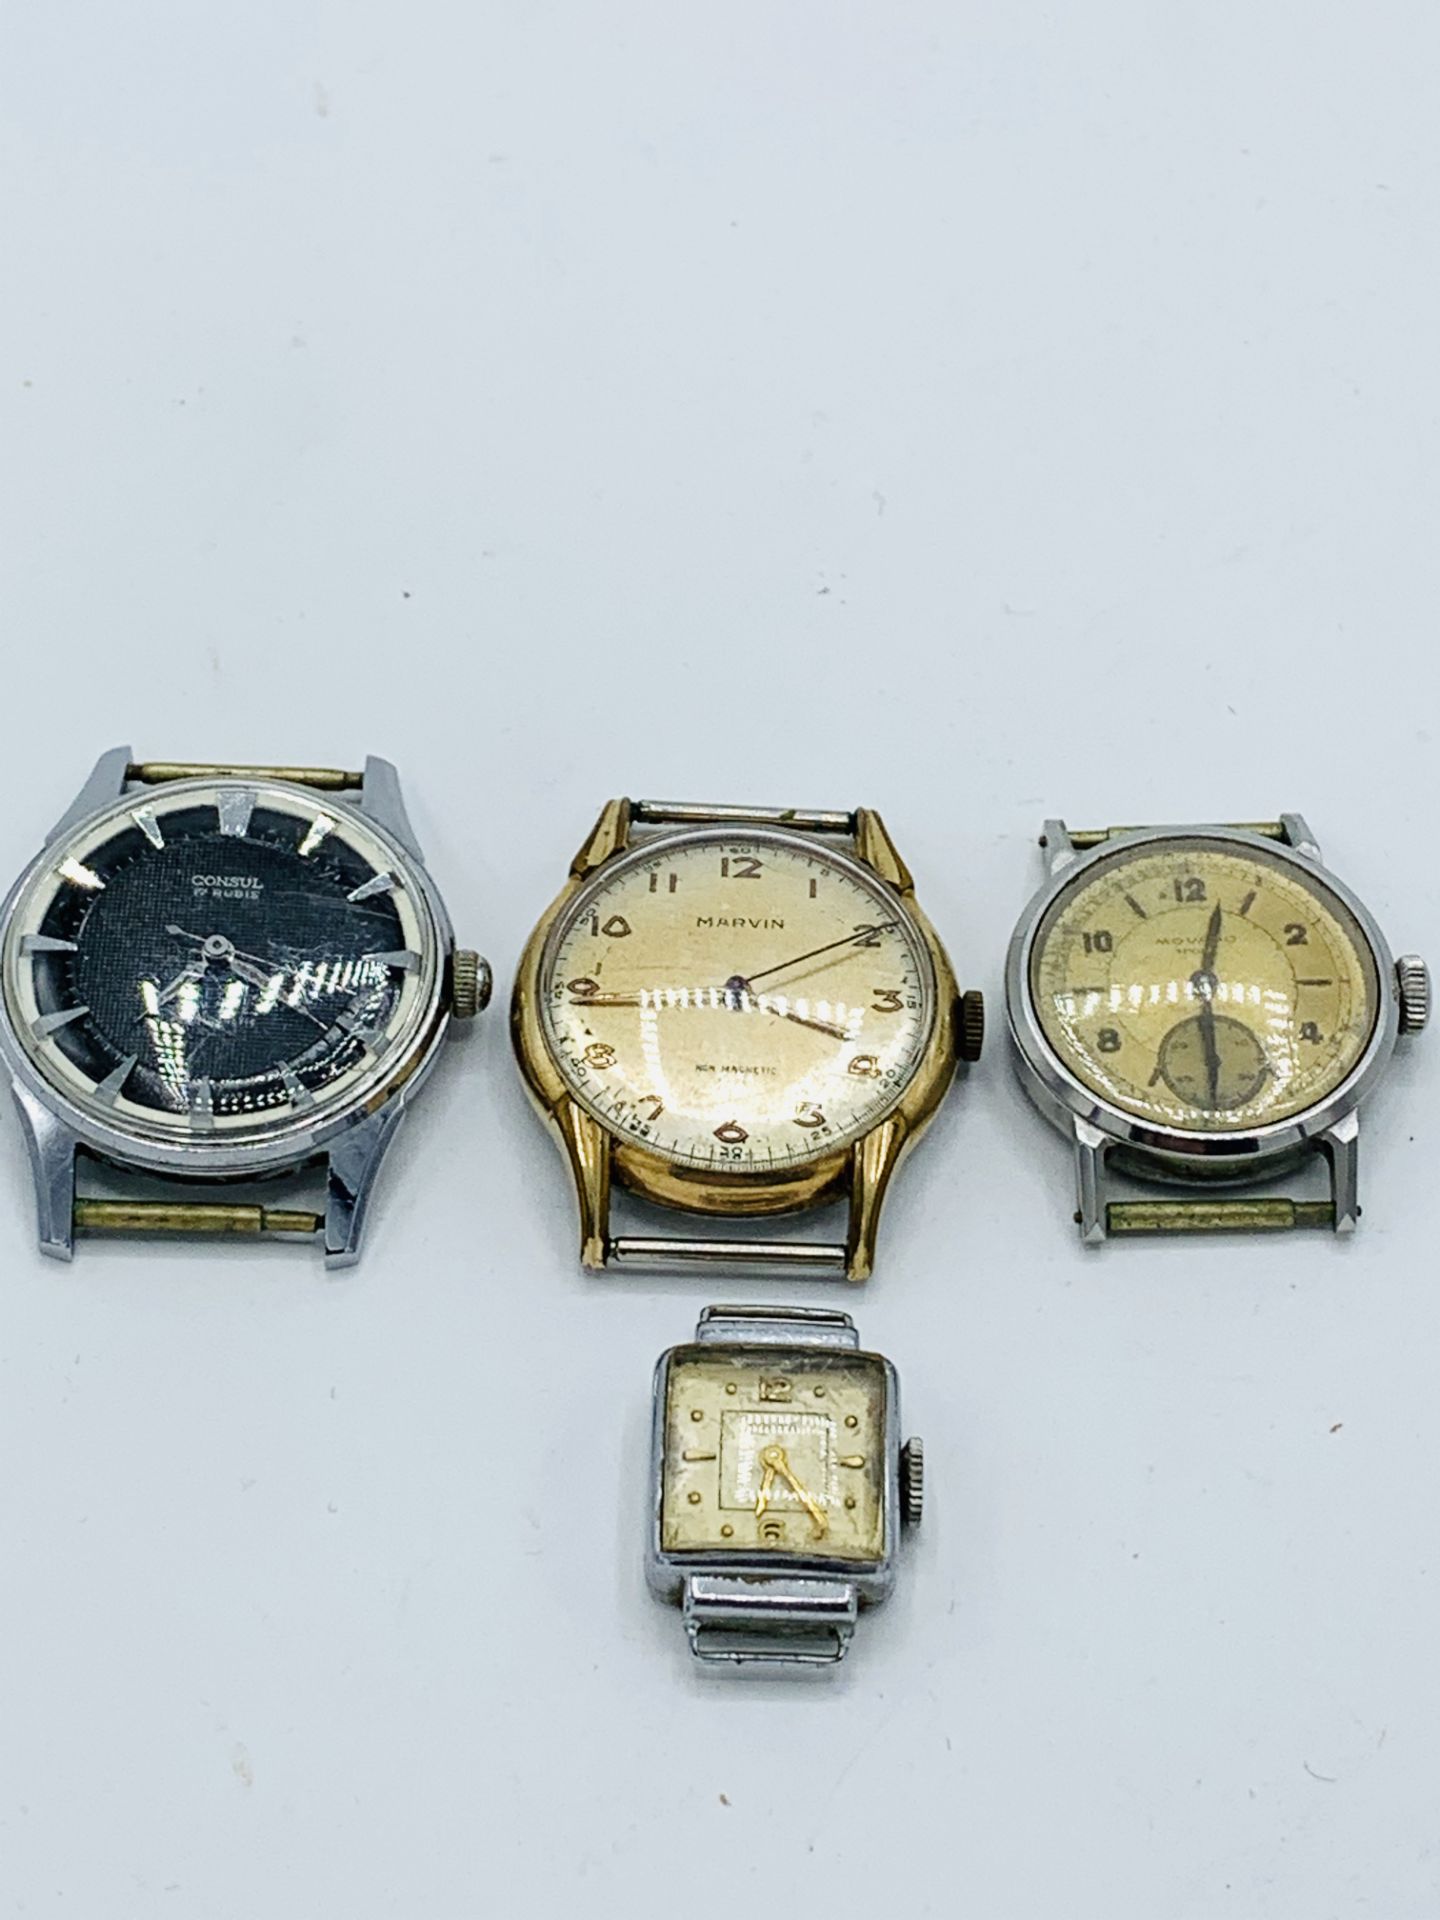 4 various manual wrist watches